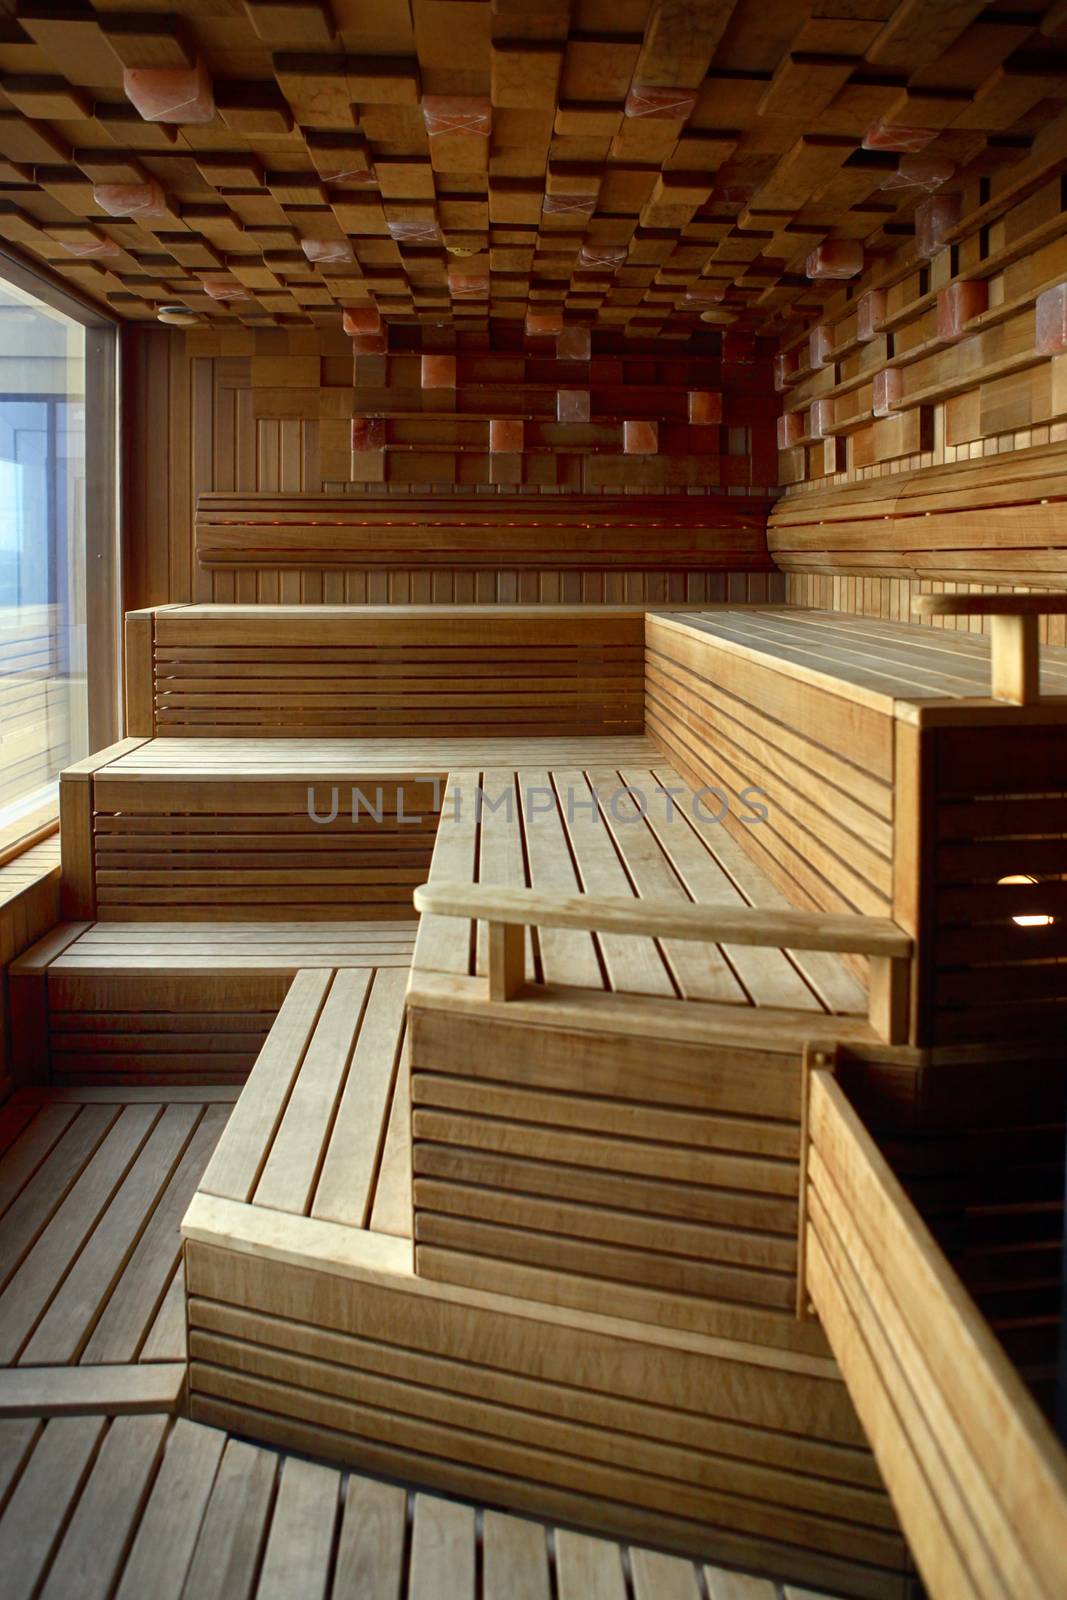 Interior of Finnish sauna